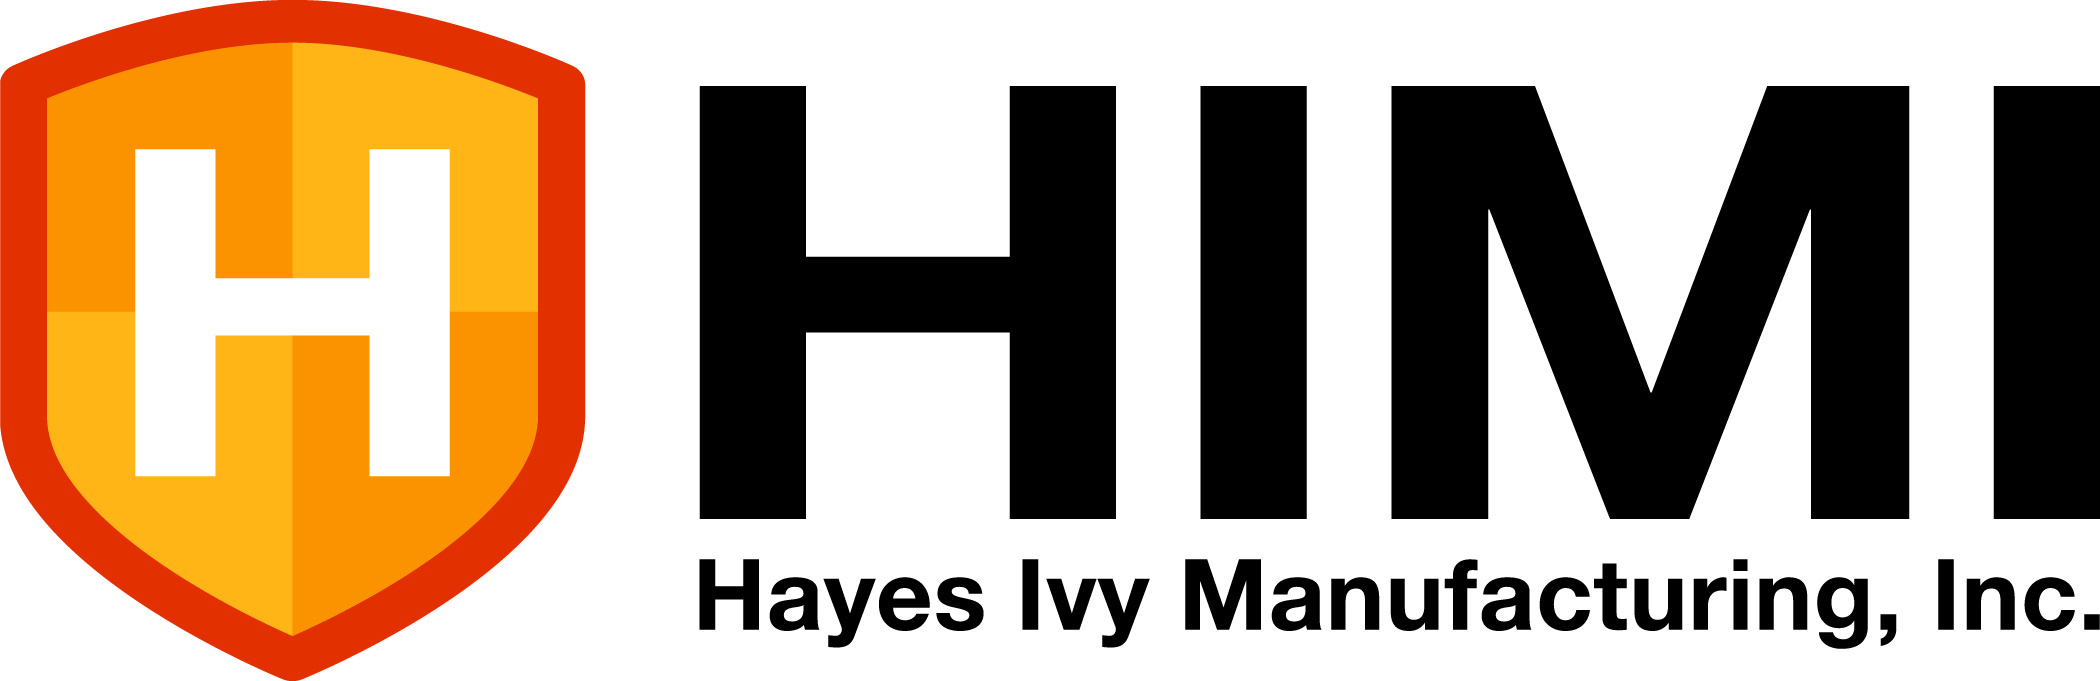 HIMI-Full-Logo-with-Shield.jpg